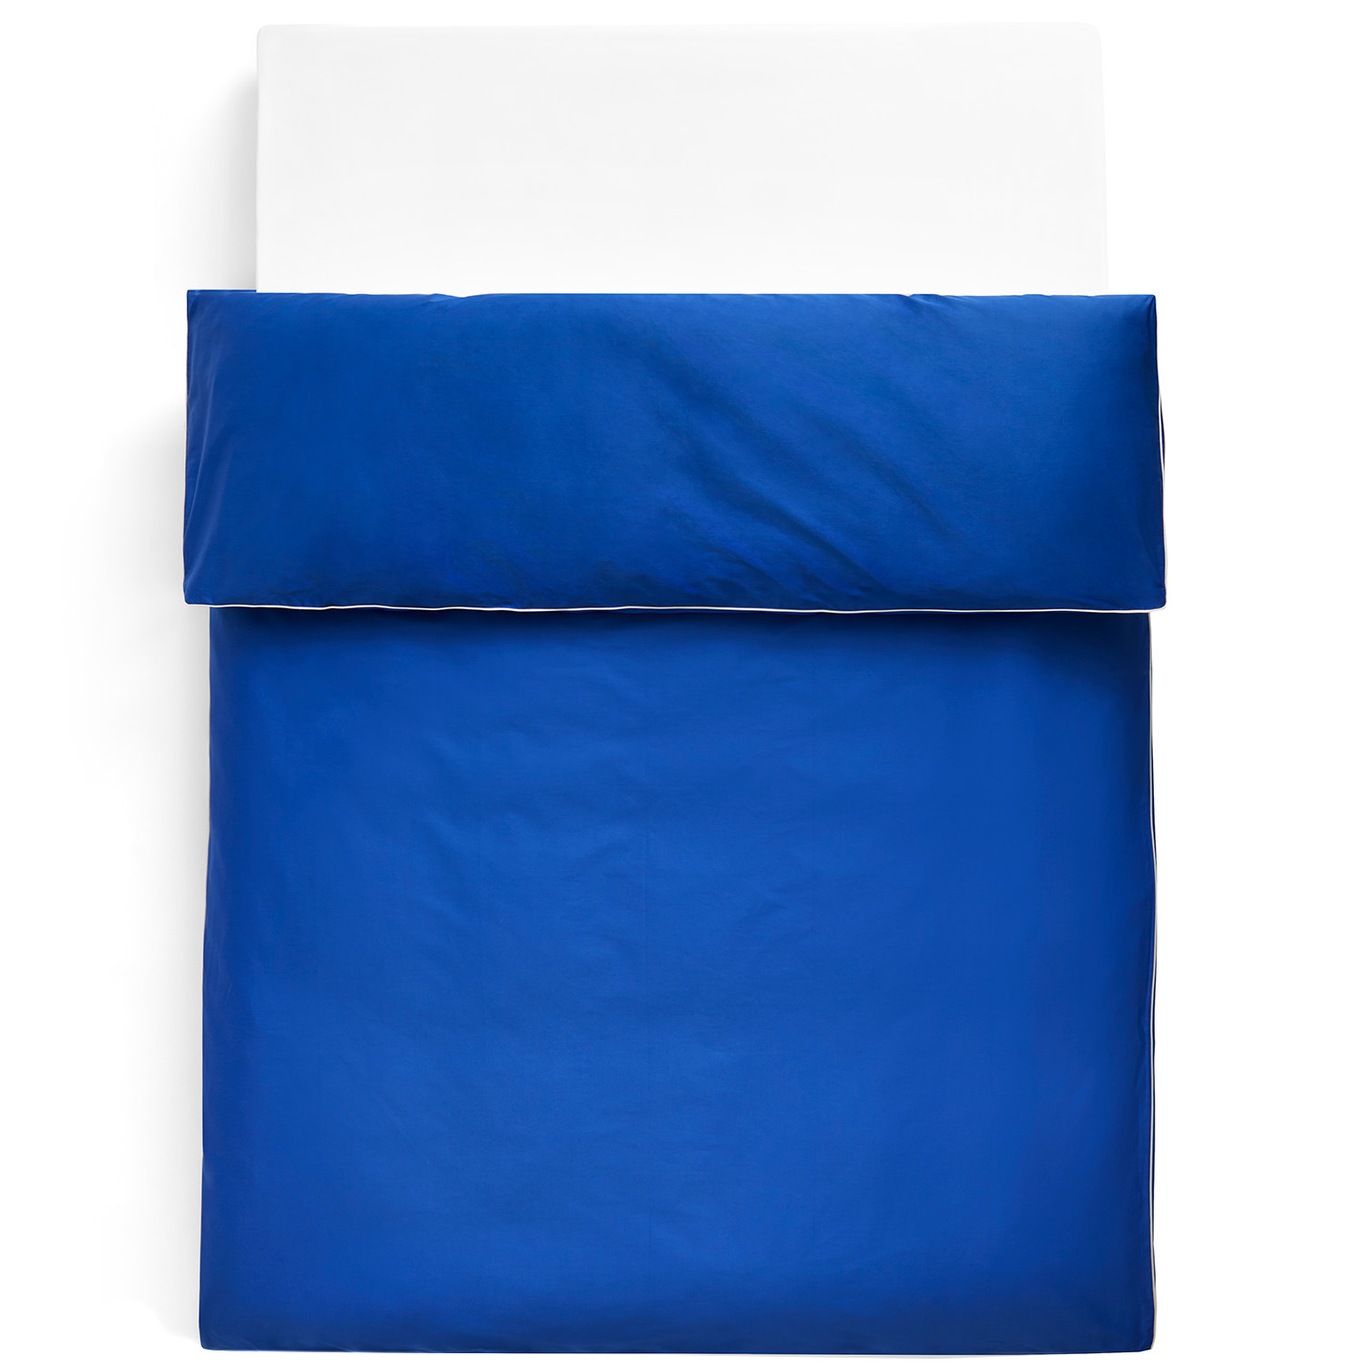 Outline Duvet Cover 220x220 cm, Vivid Blue